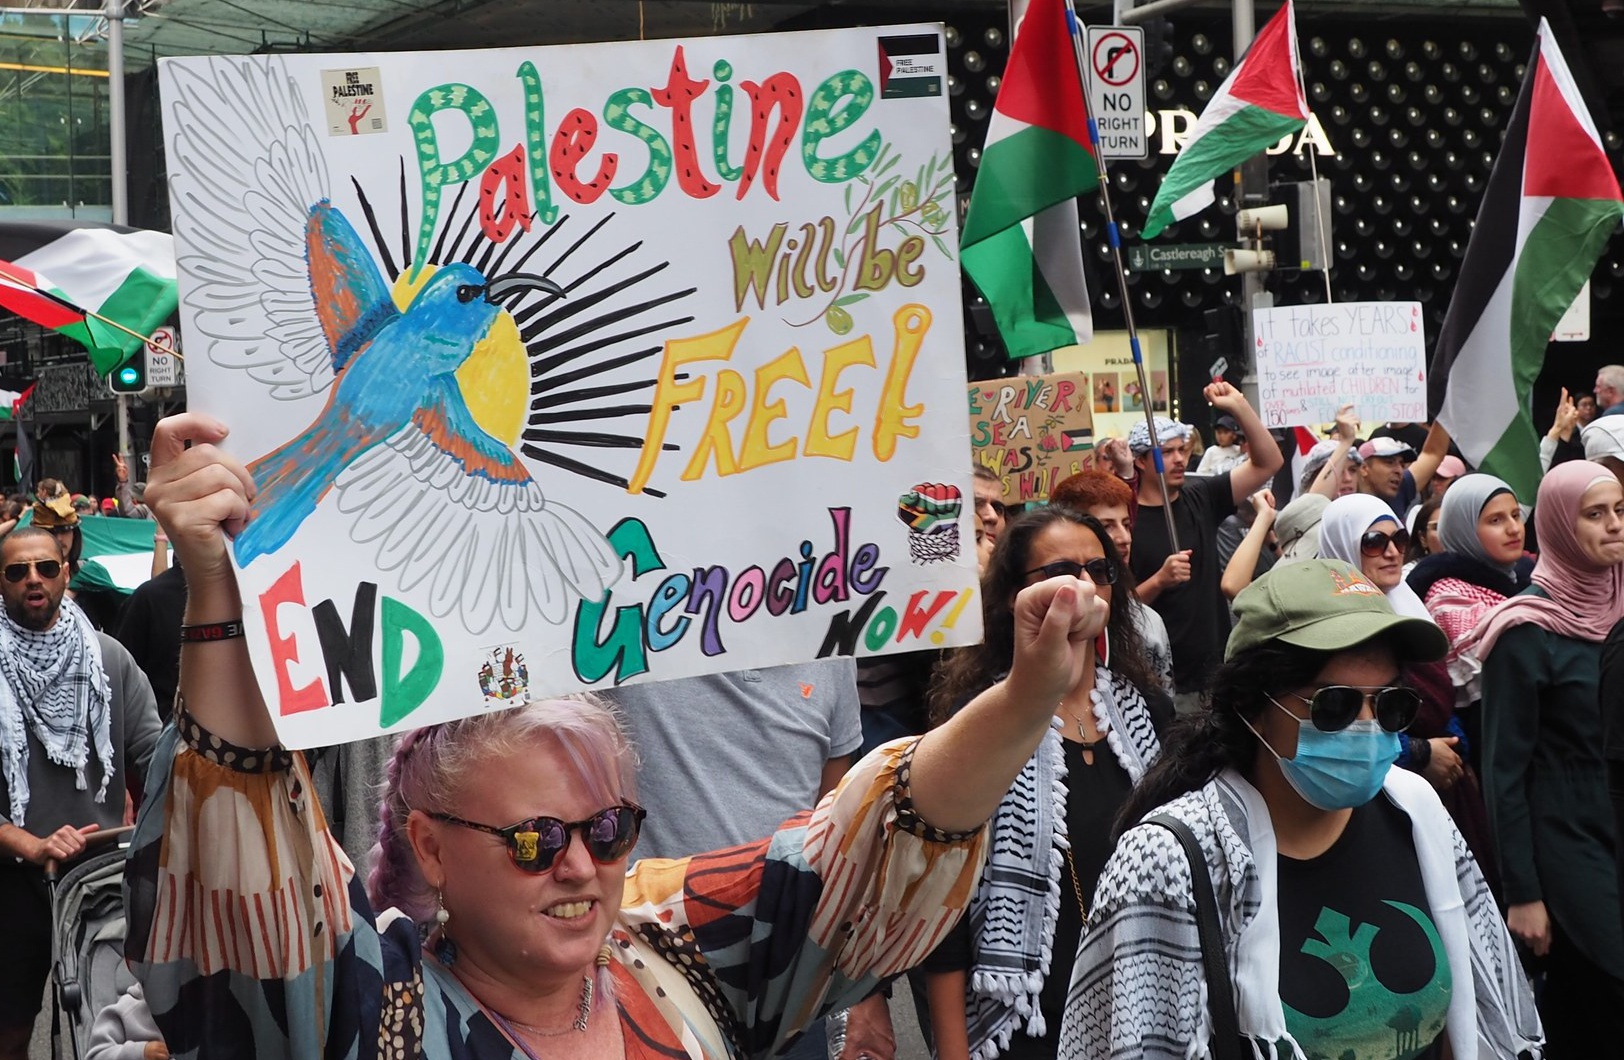 Palestine will be free, Gadigal/Sydney, April 21